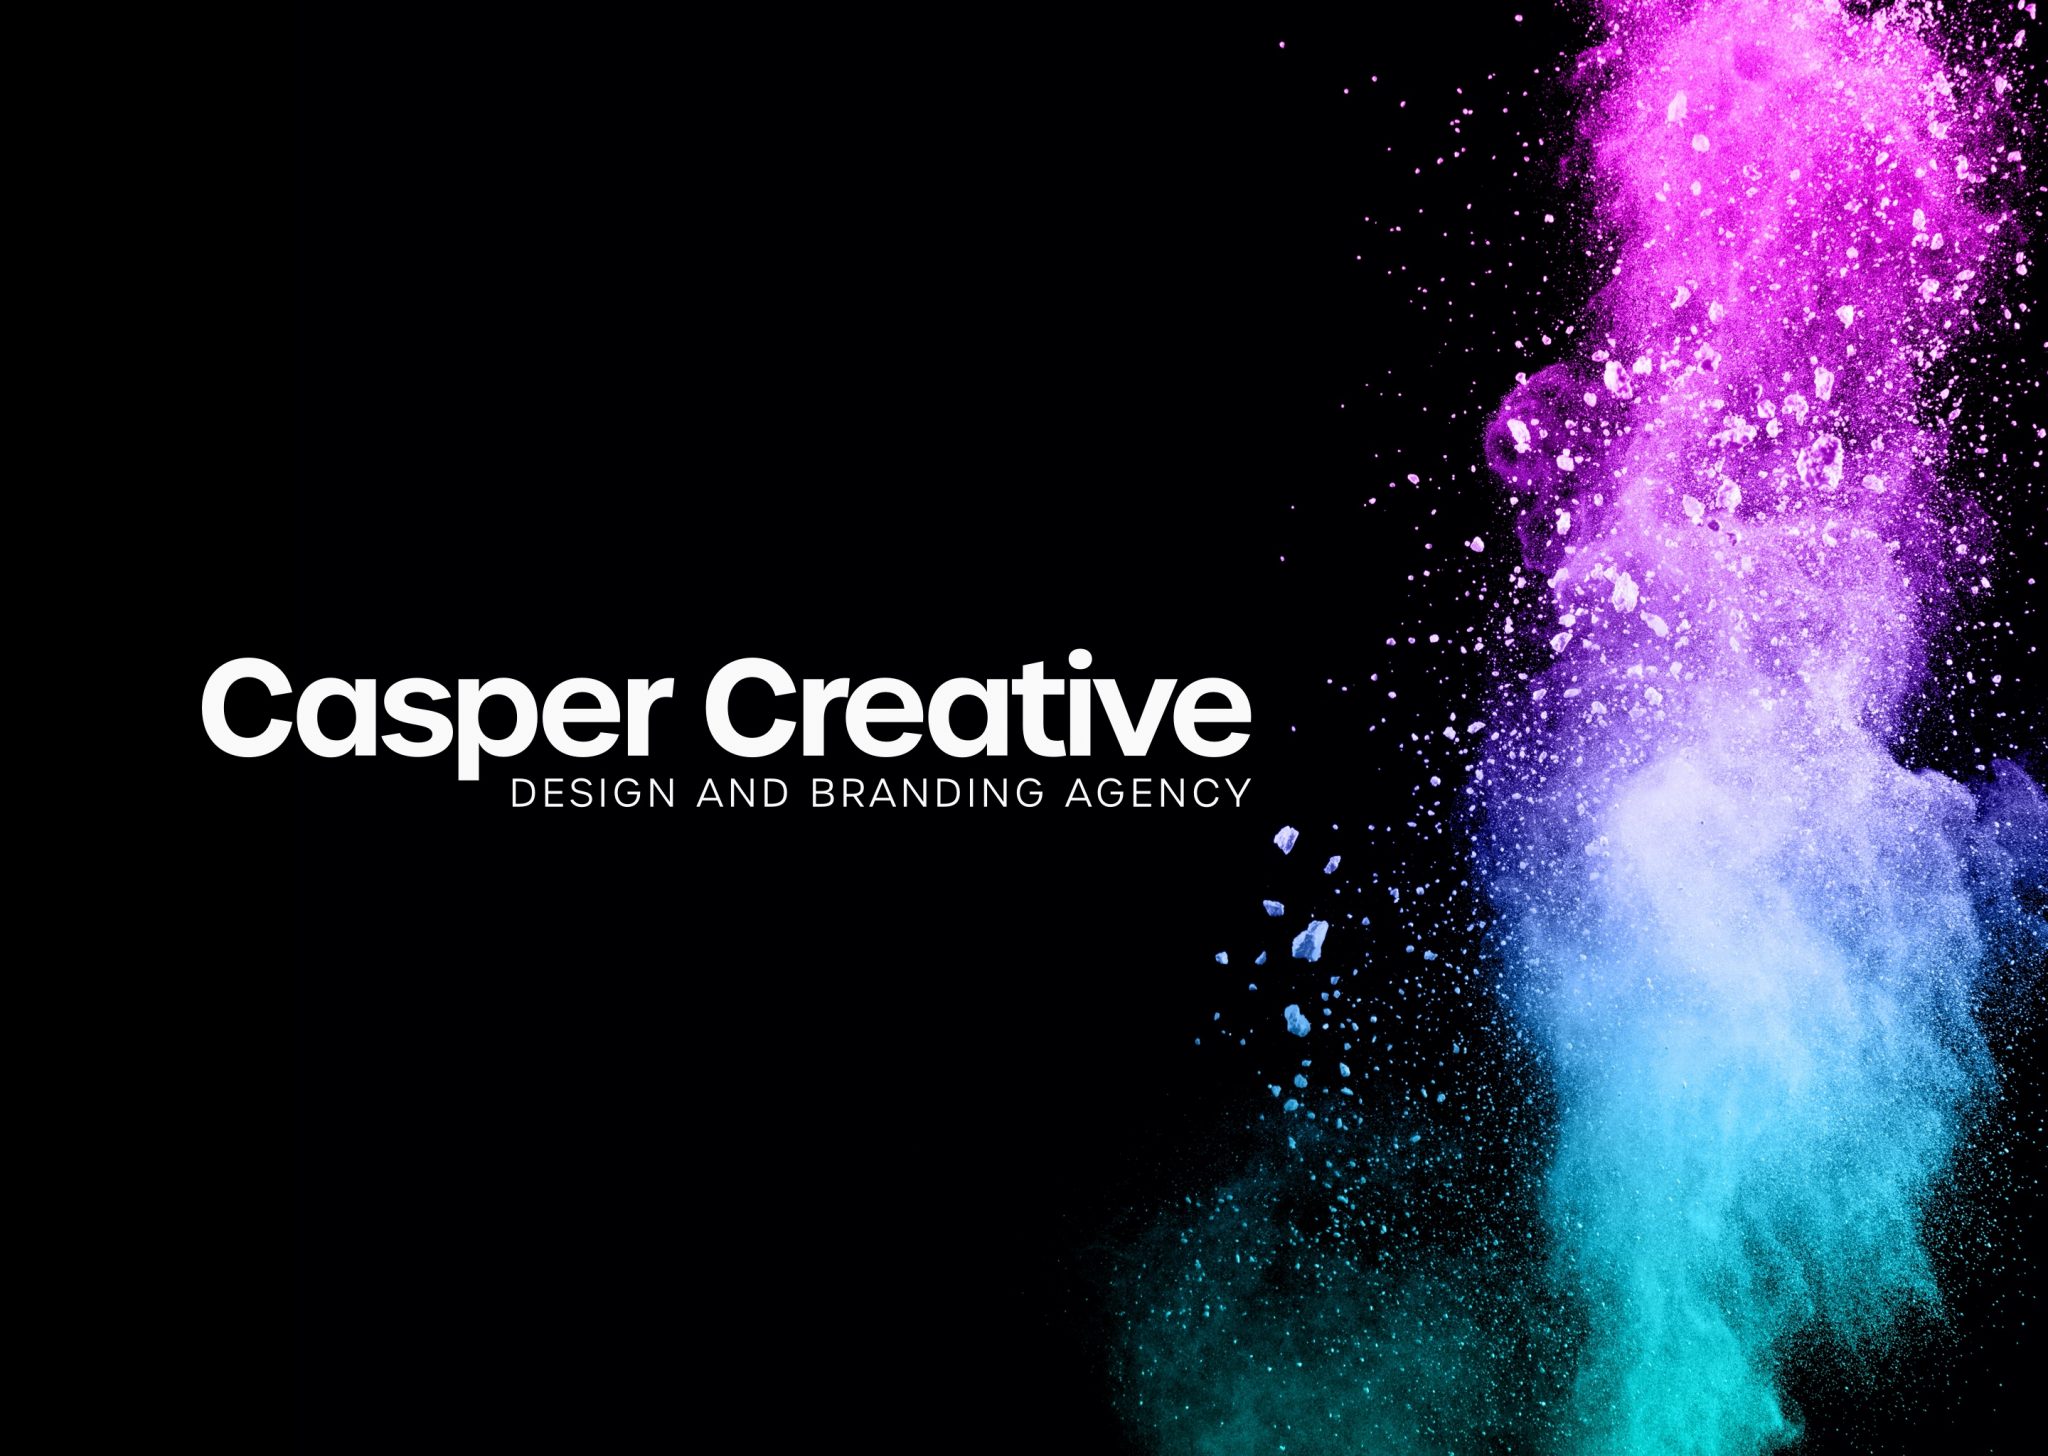 Casper Creative Design and Brand Agency